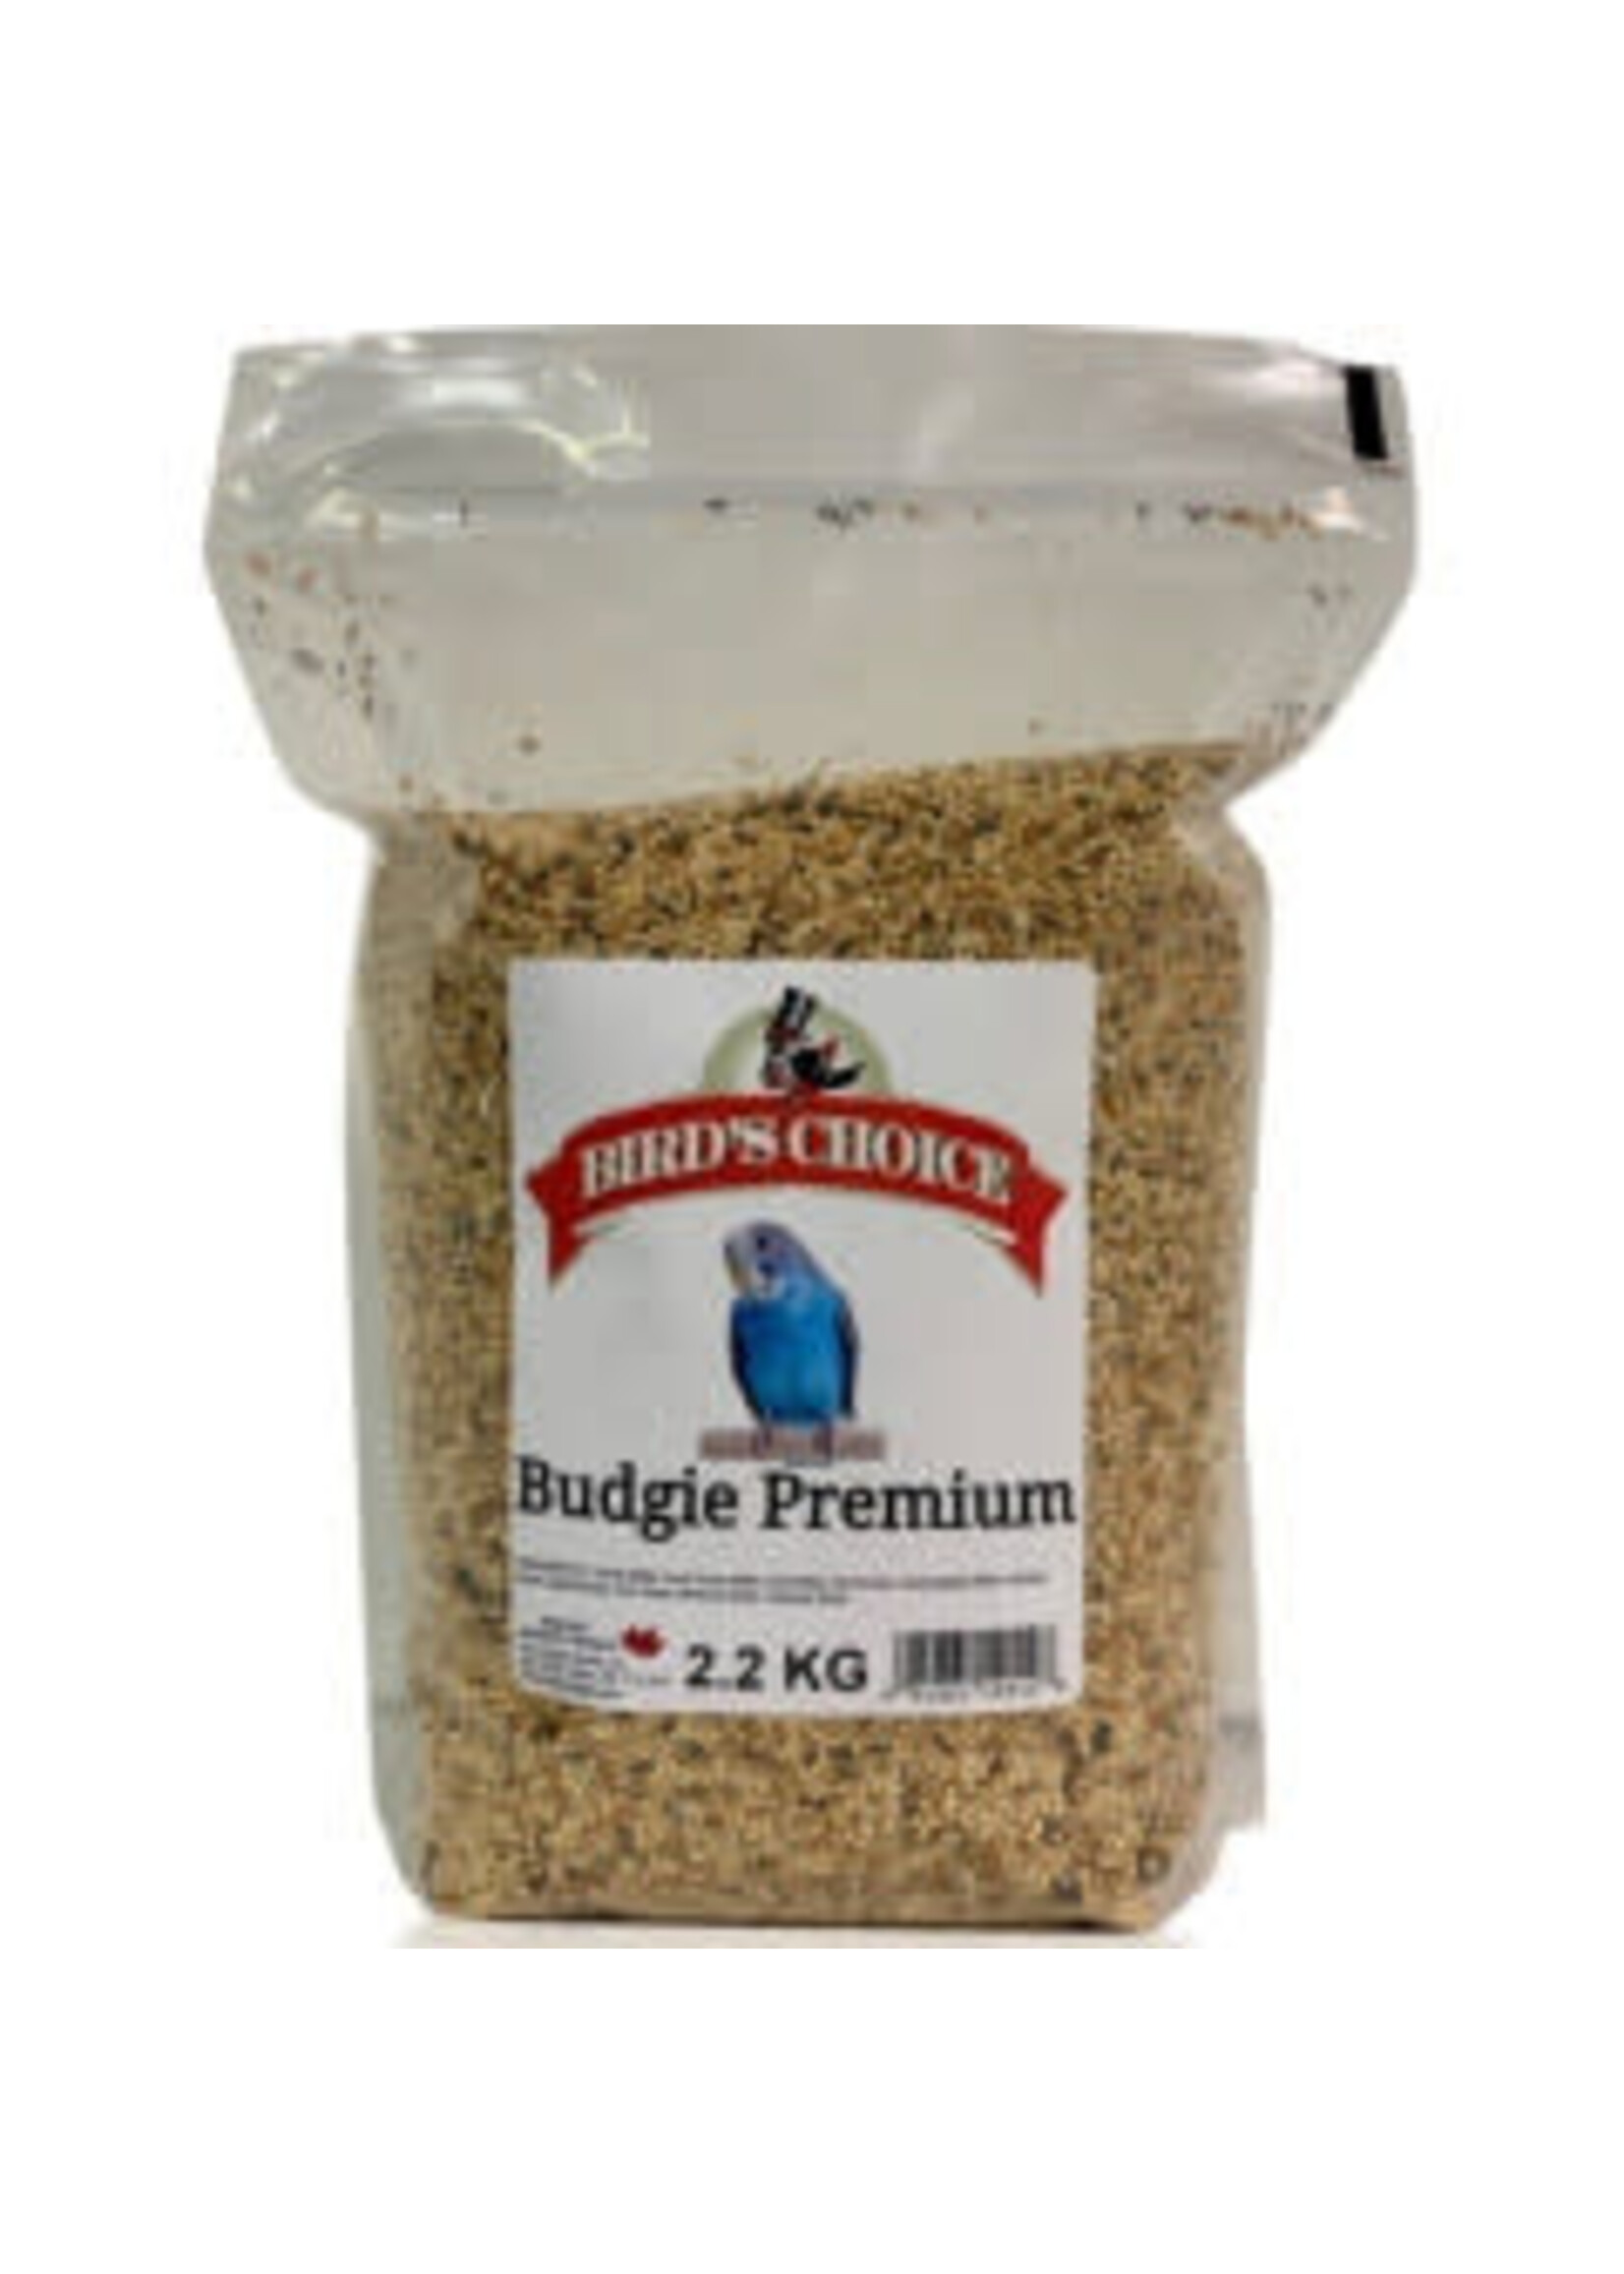 Bird Choice Birds Choice - Budgie Premium 2.2kg